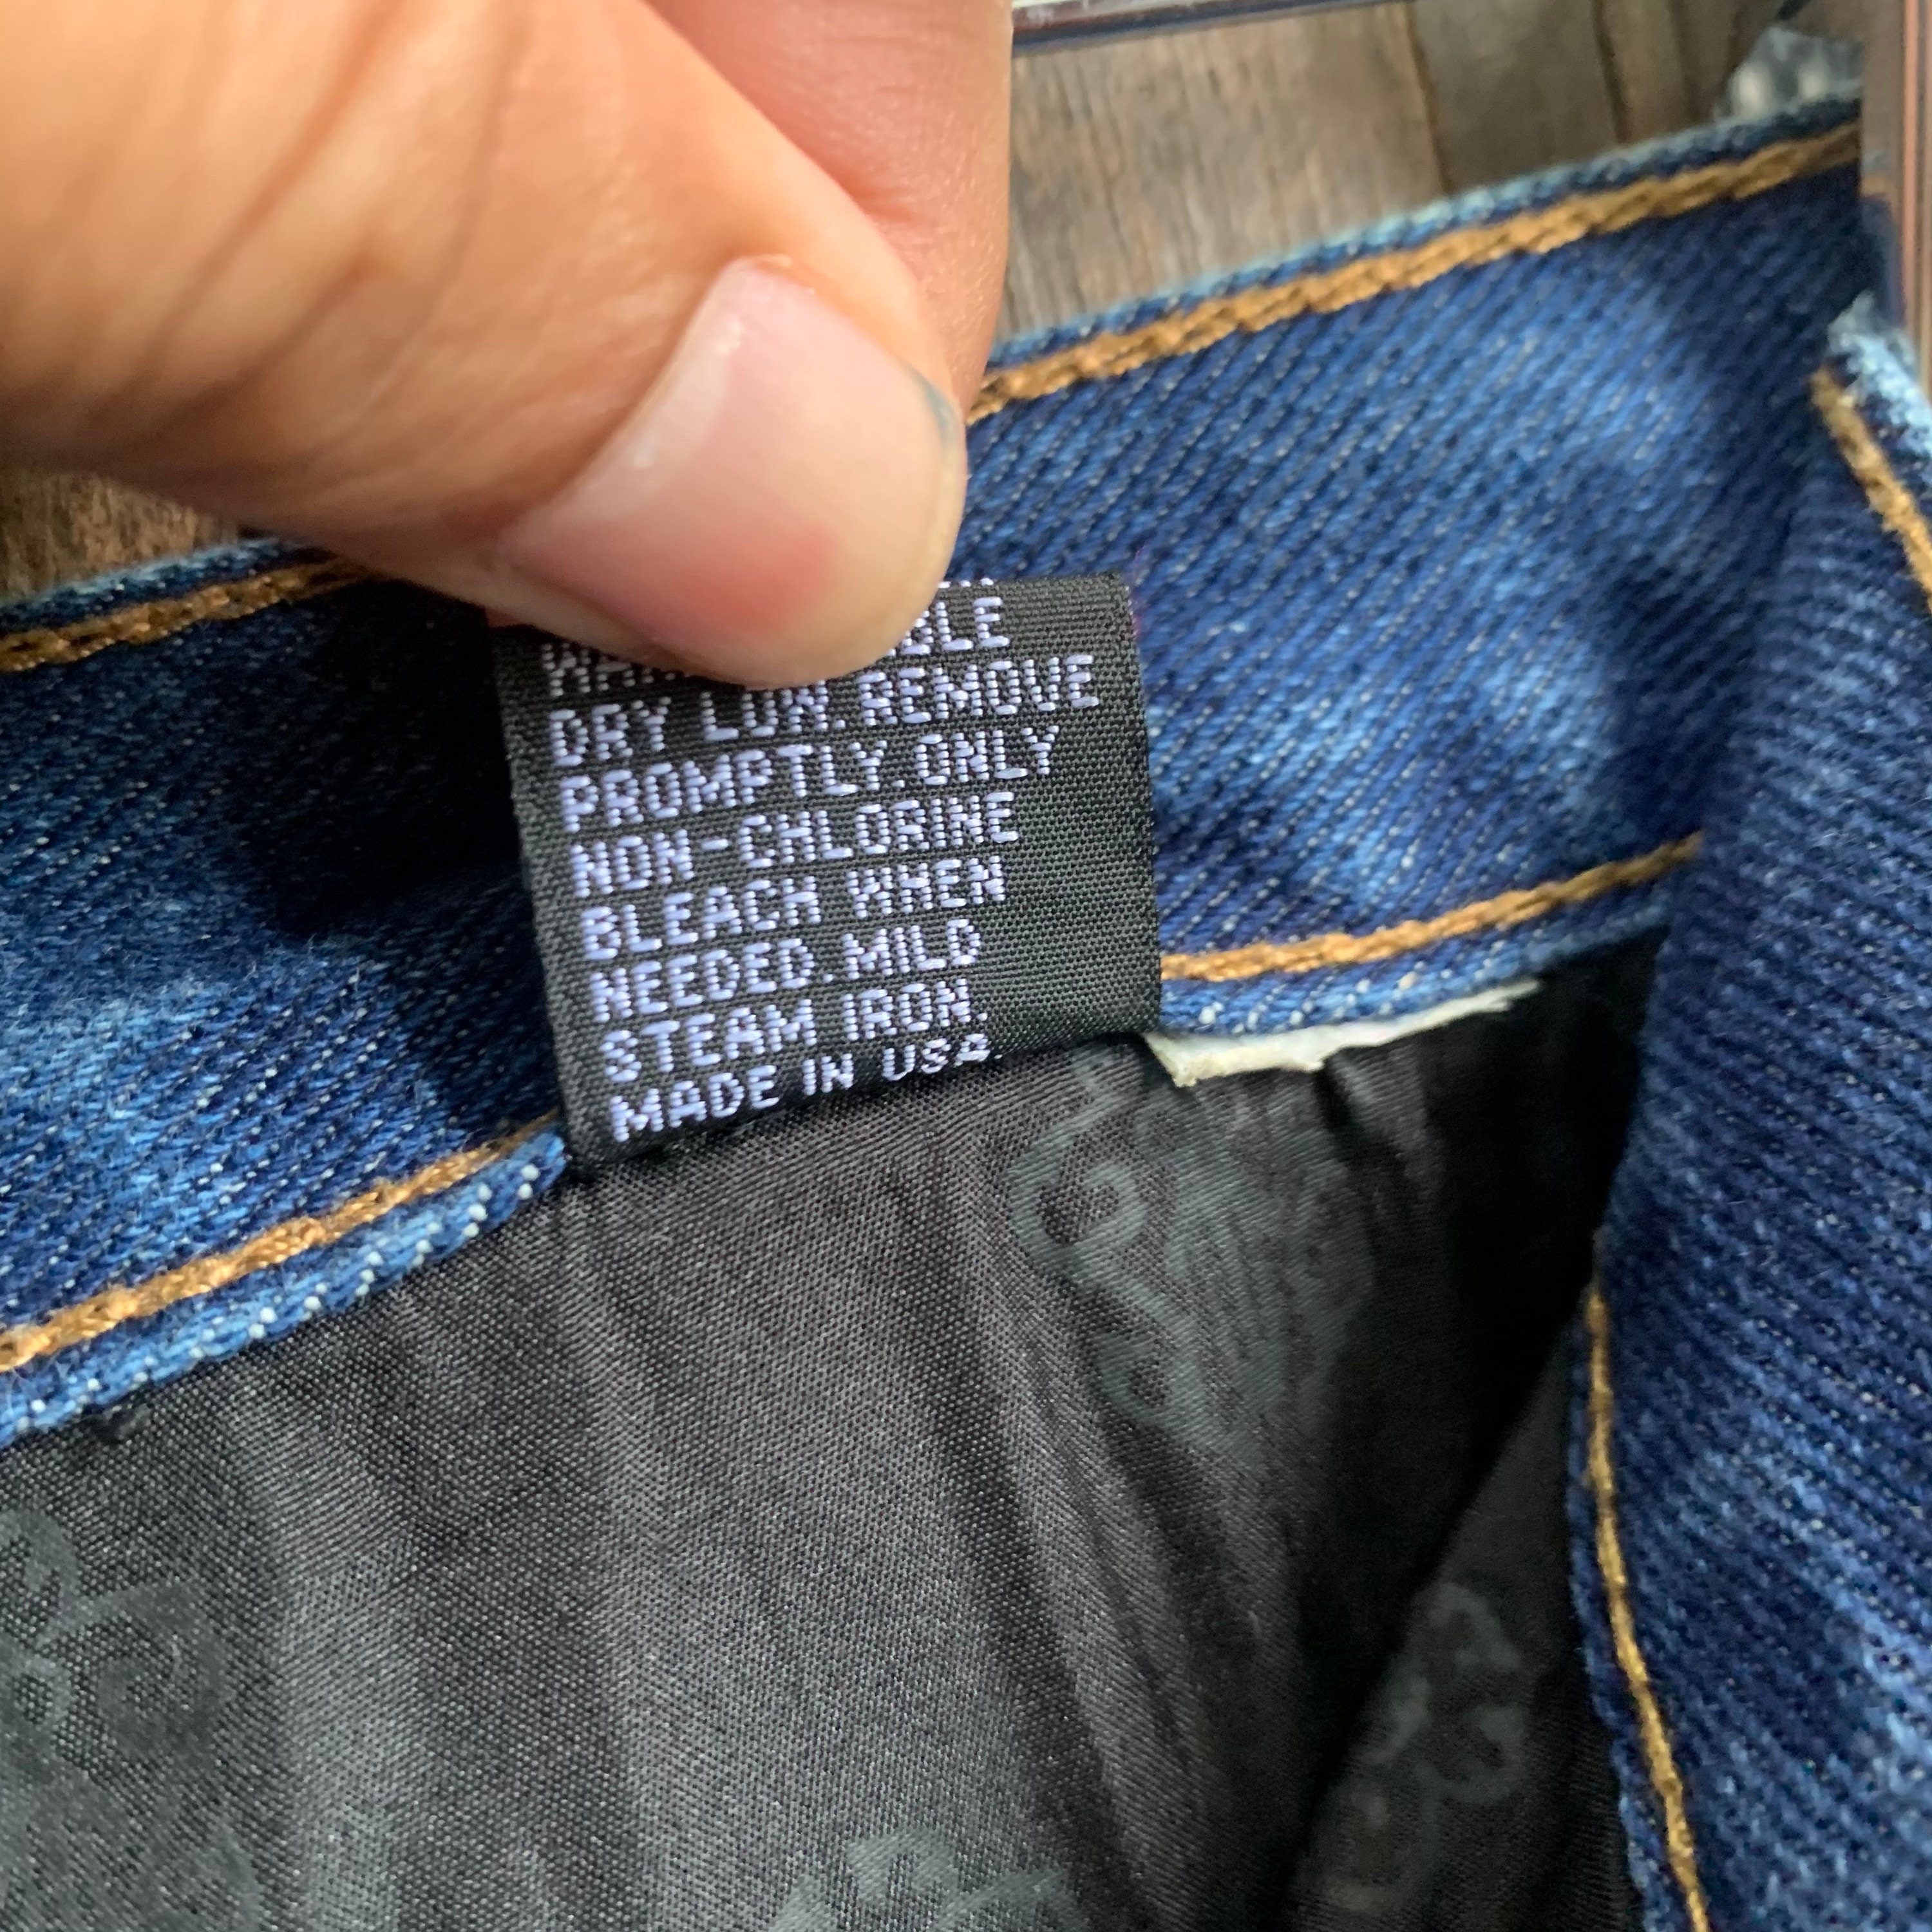 Bootleg Chrome Hearts Cross Patchwork Denim Jeans | Etsy